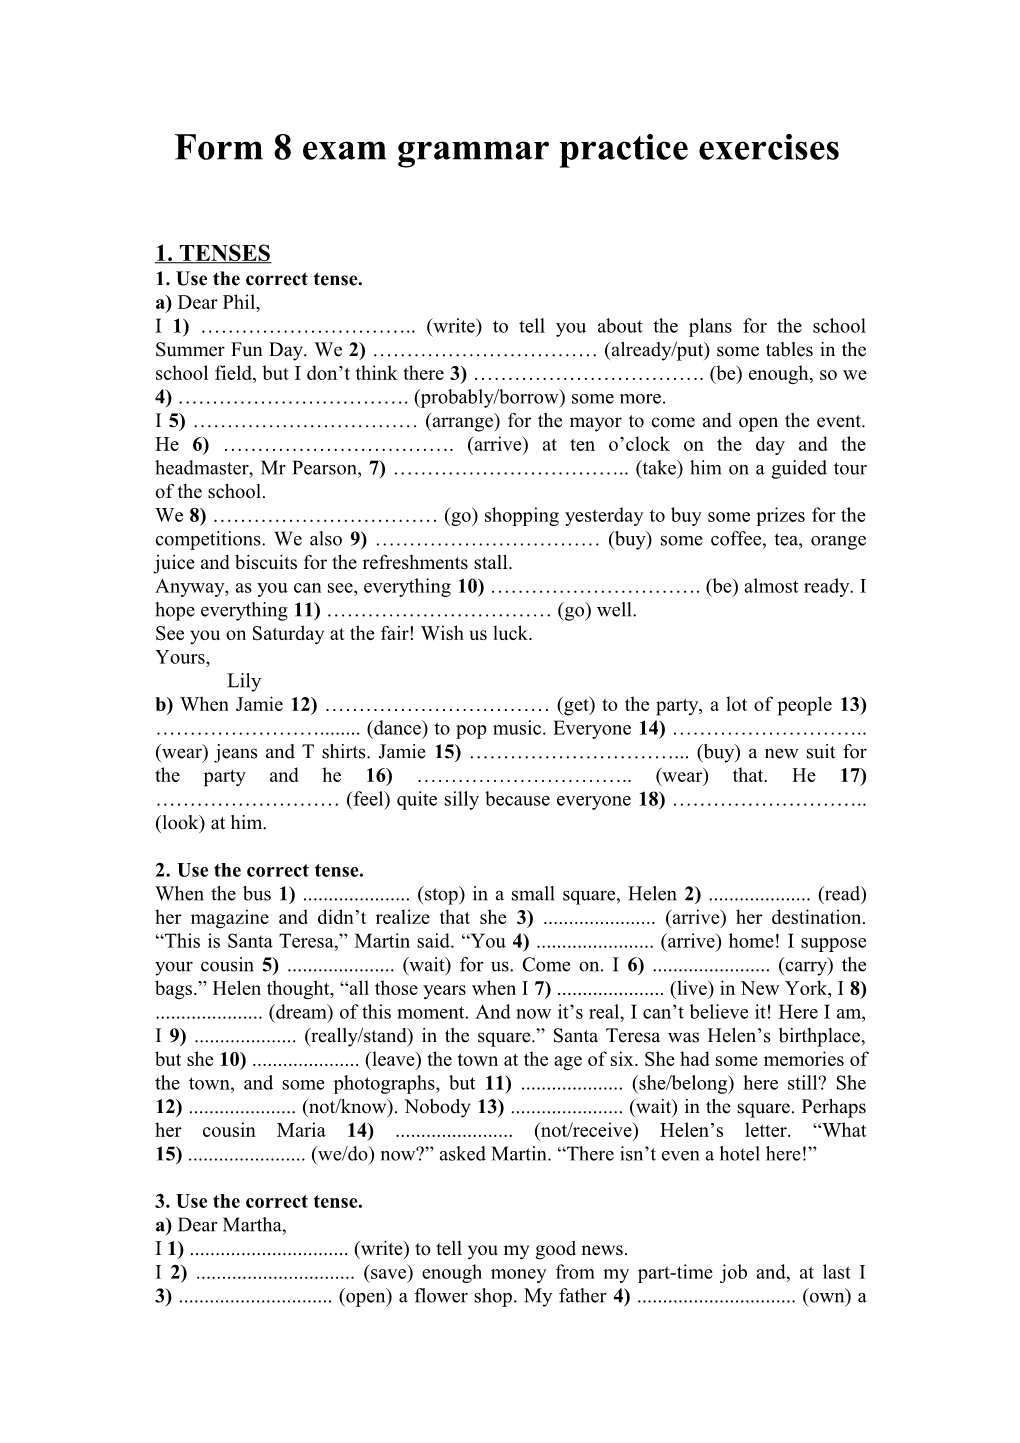 Form 8 Exam Grammar Practice Exercises